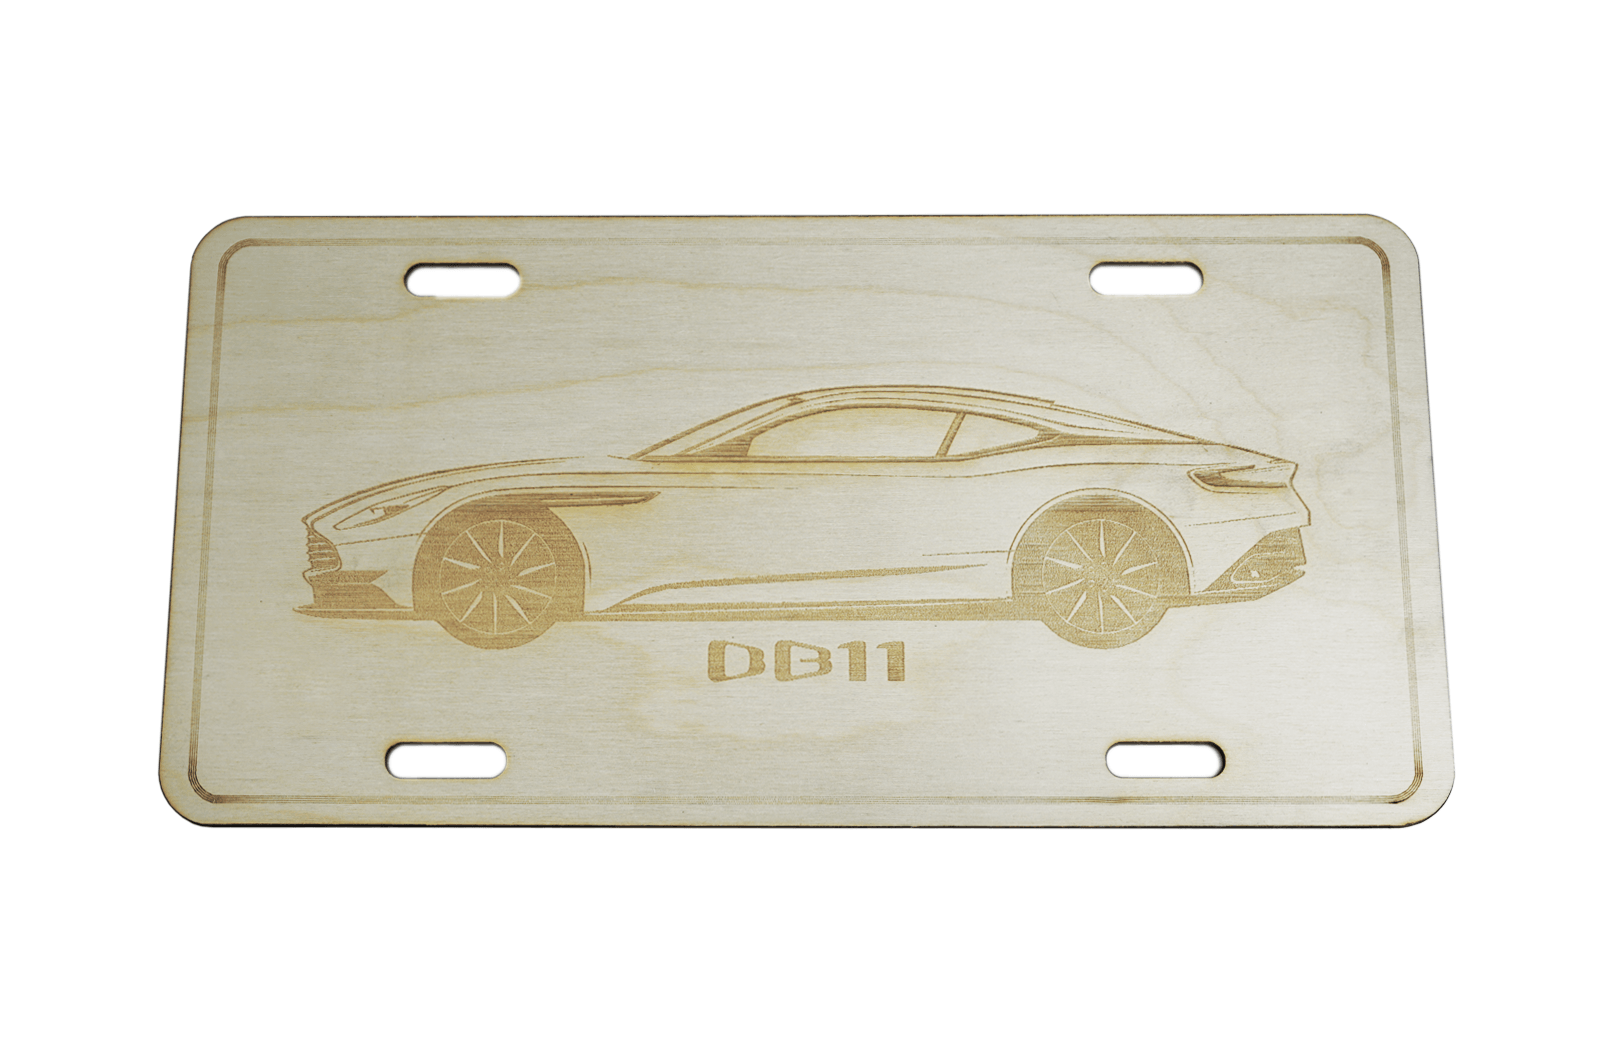 ZSPEC Aston Martin DB11 License Plate, Birch, Ornament for Office, Garage or Man-Cave